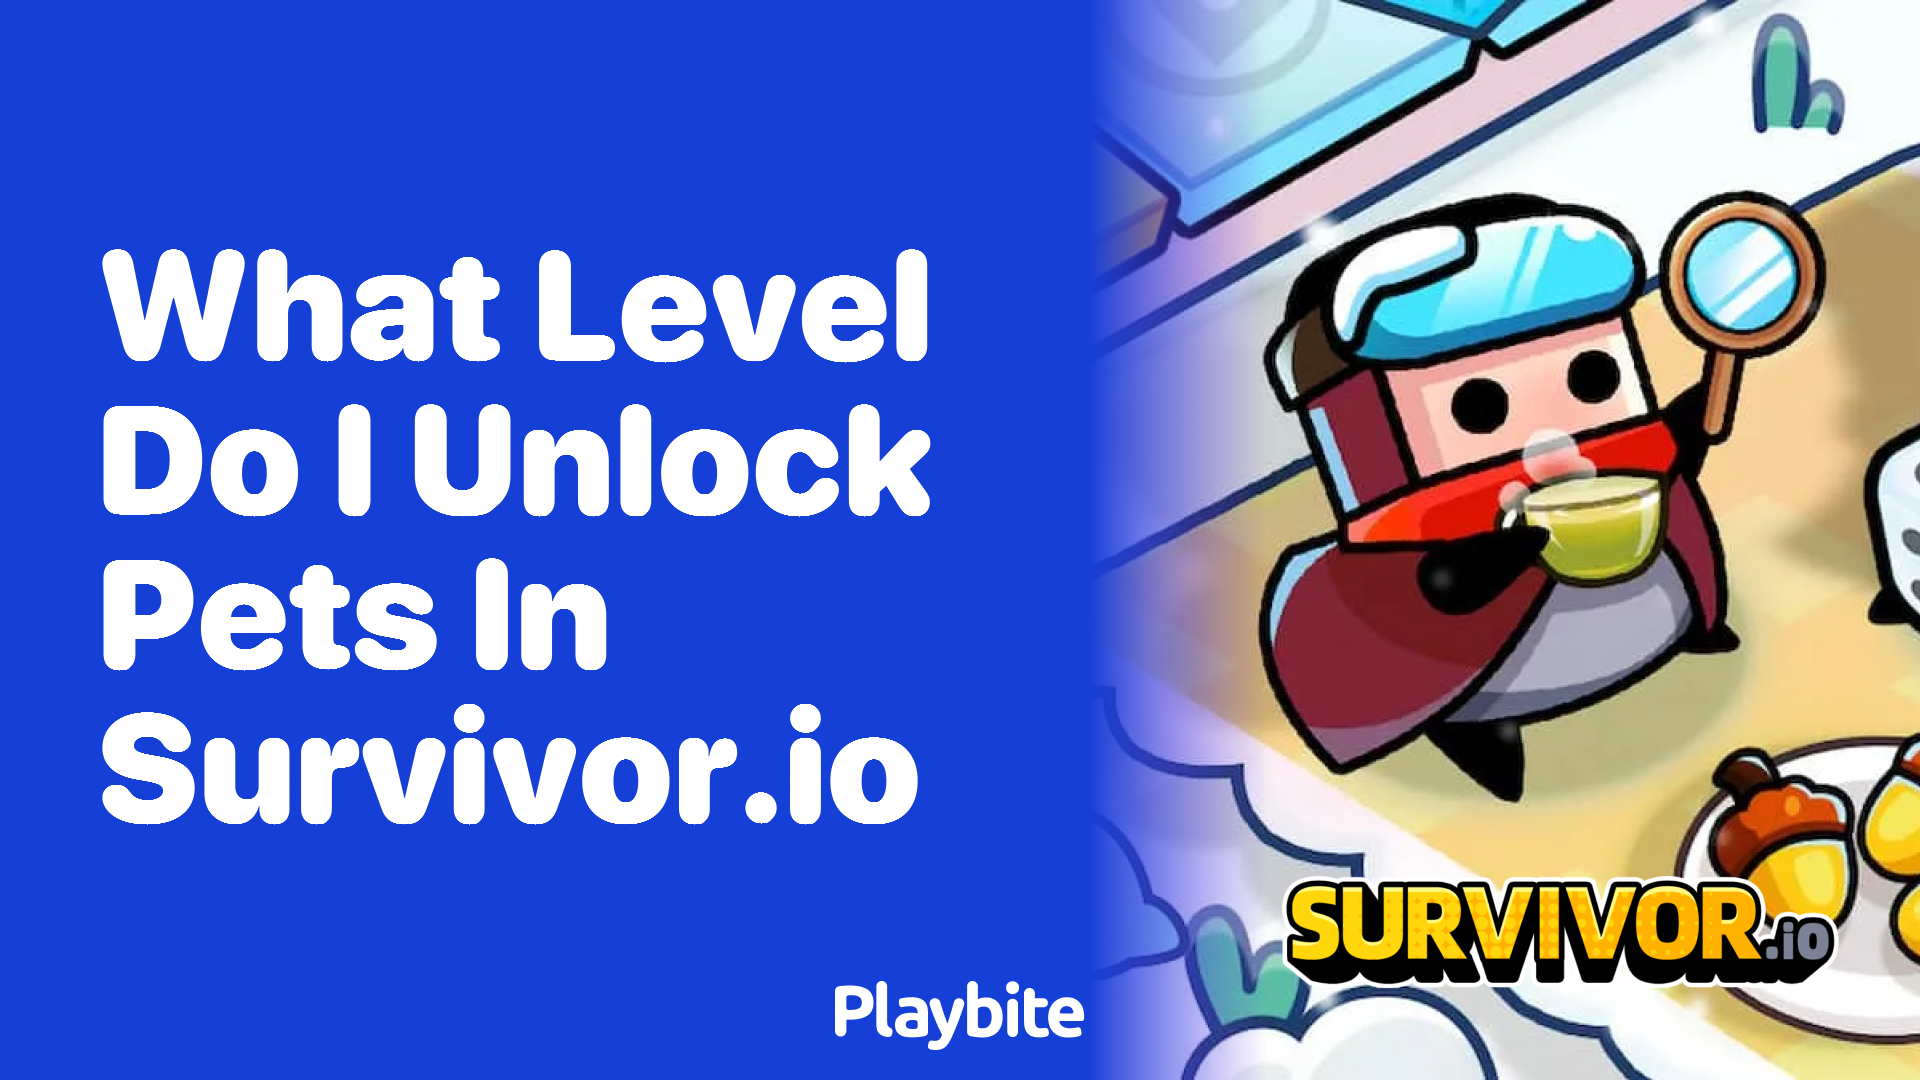 What Level Do You Unlock Pets in Survivor.io?